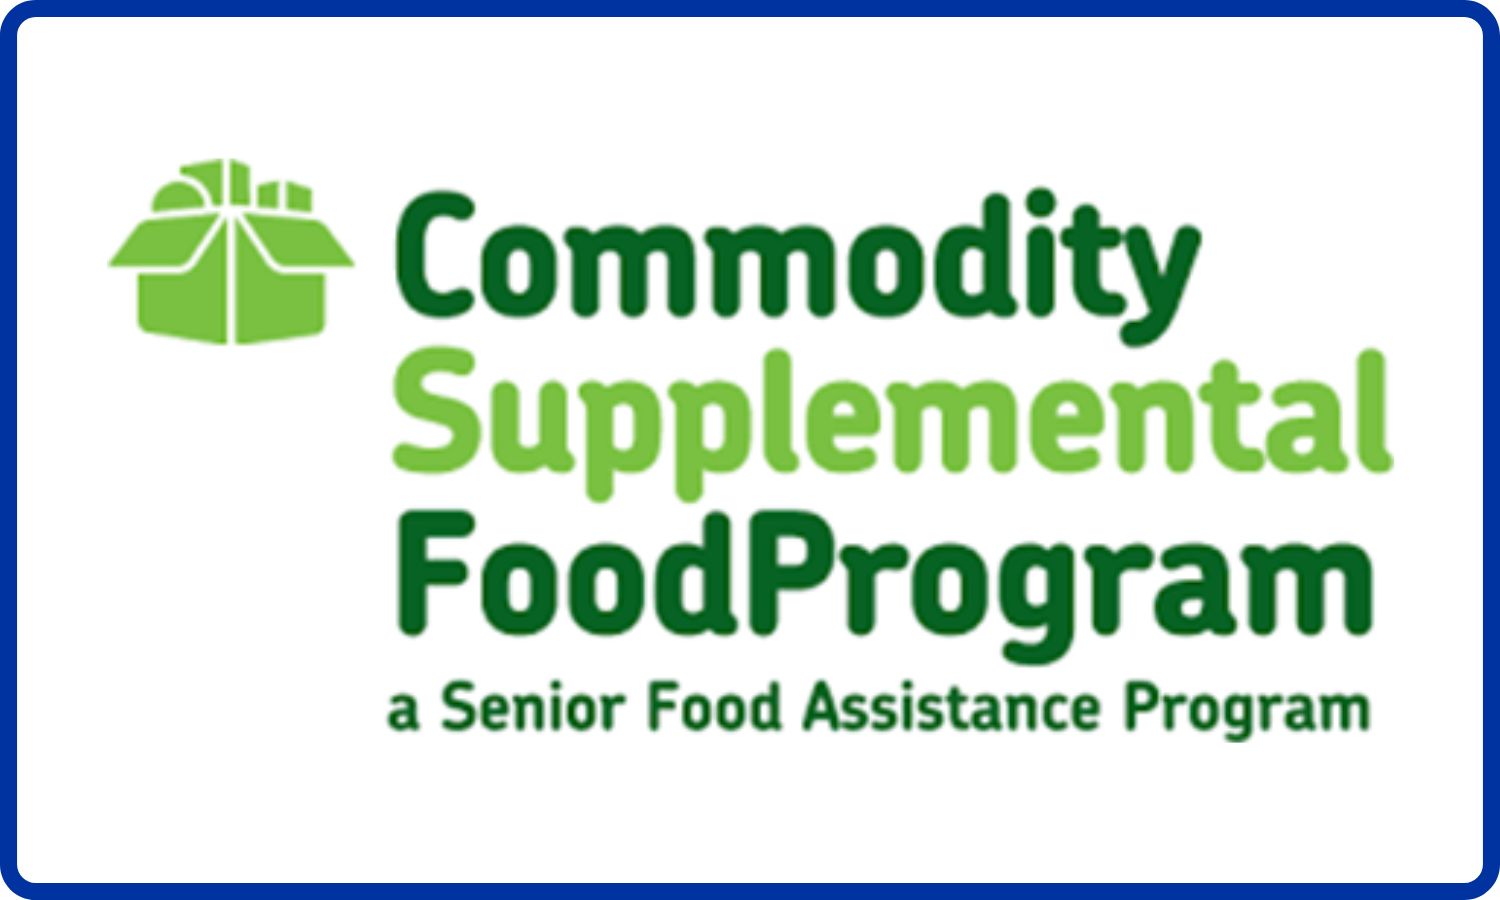 Commodity supplemental food program logo